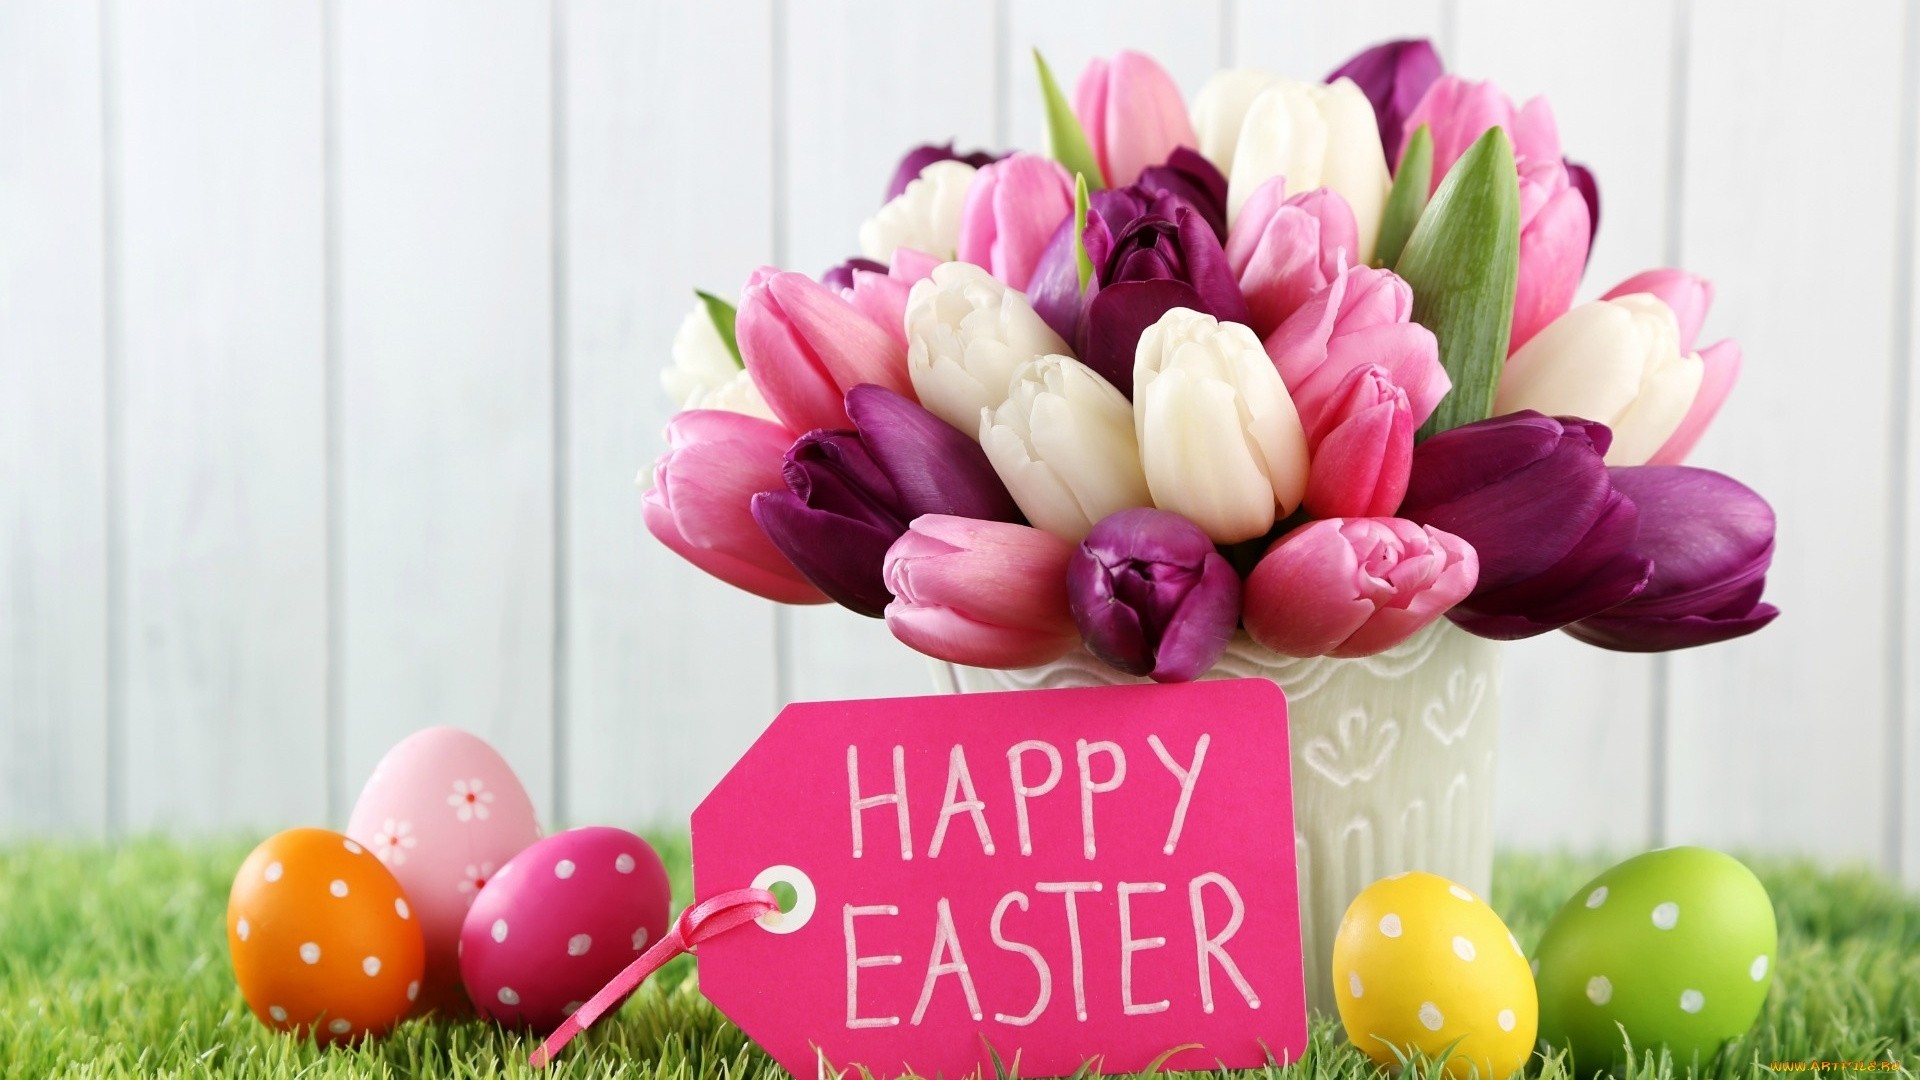 Happy Easter Image Desktop